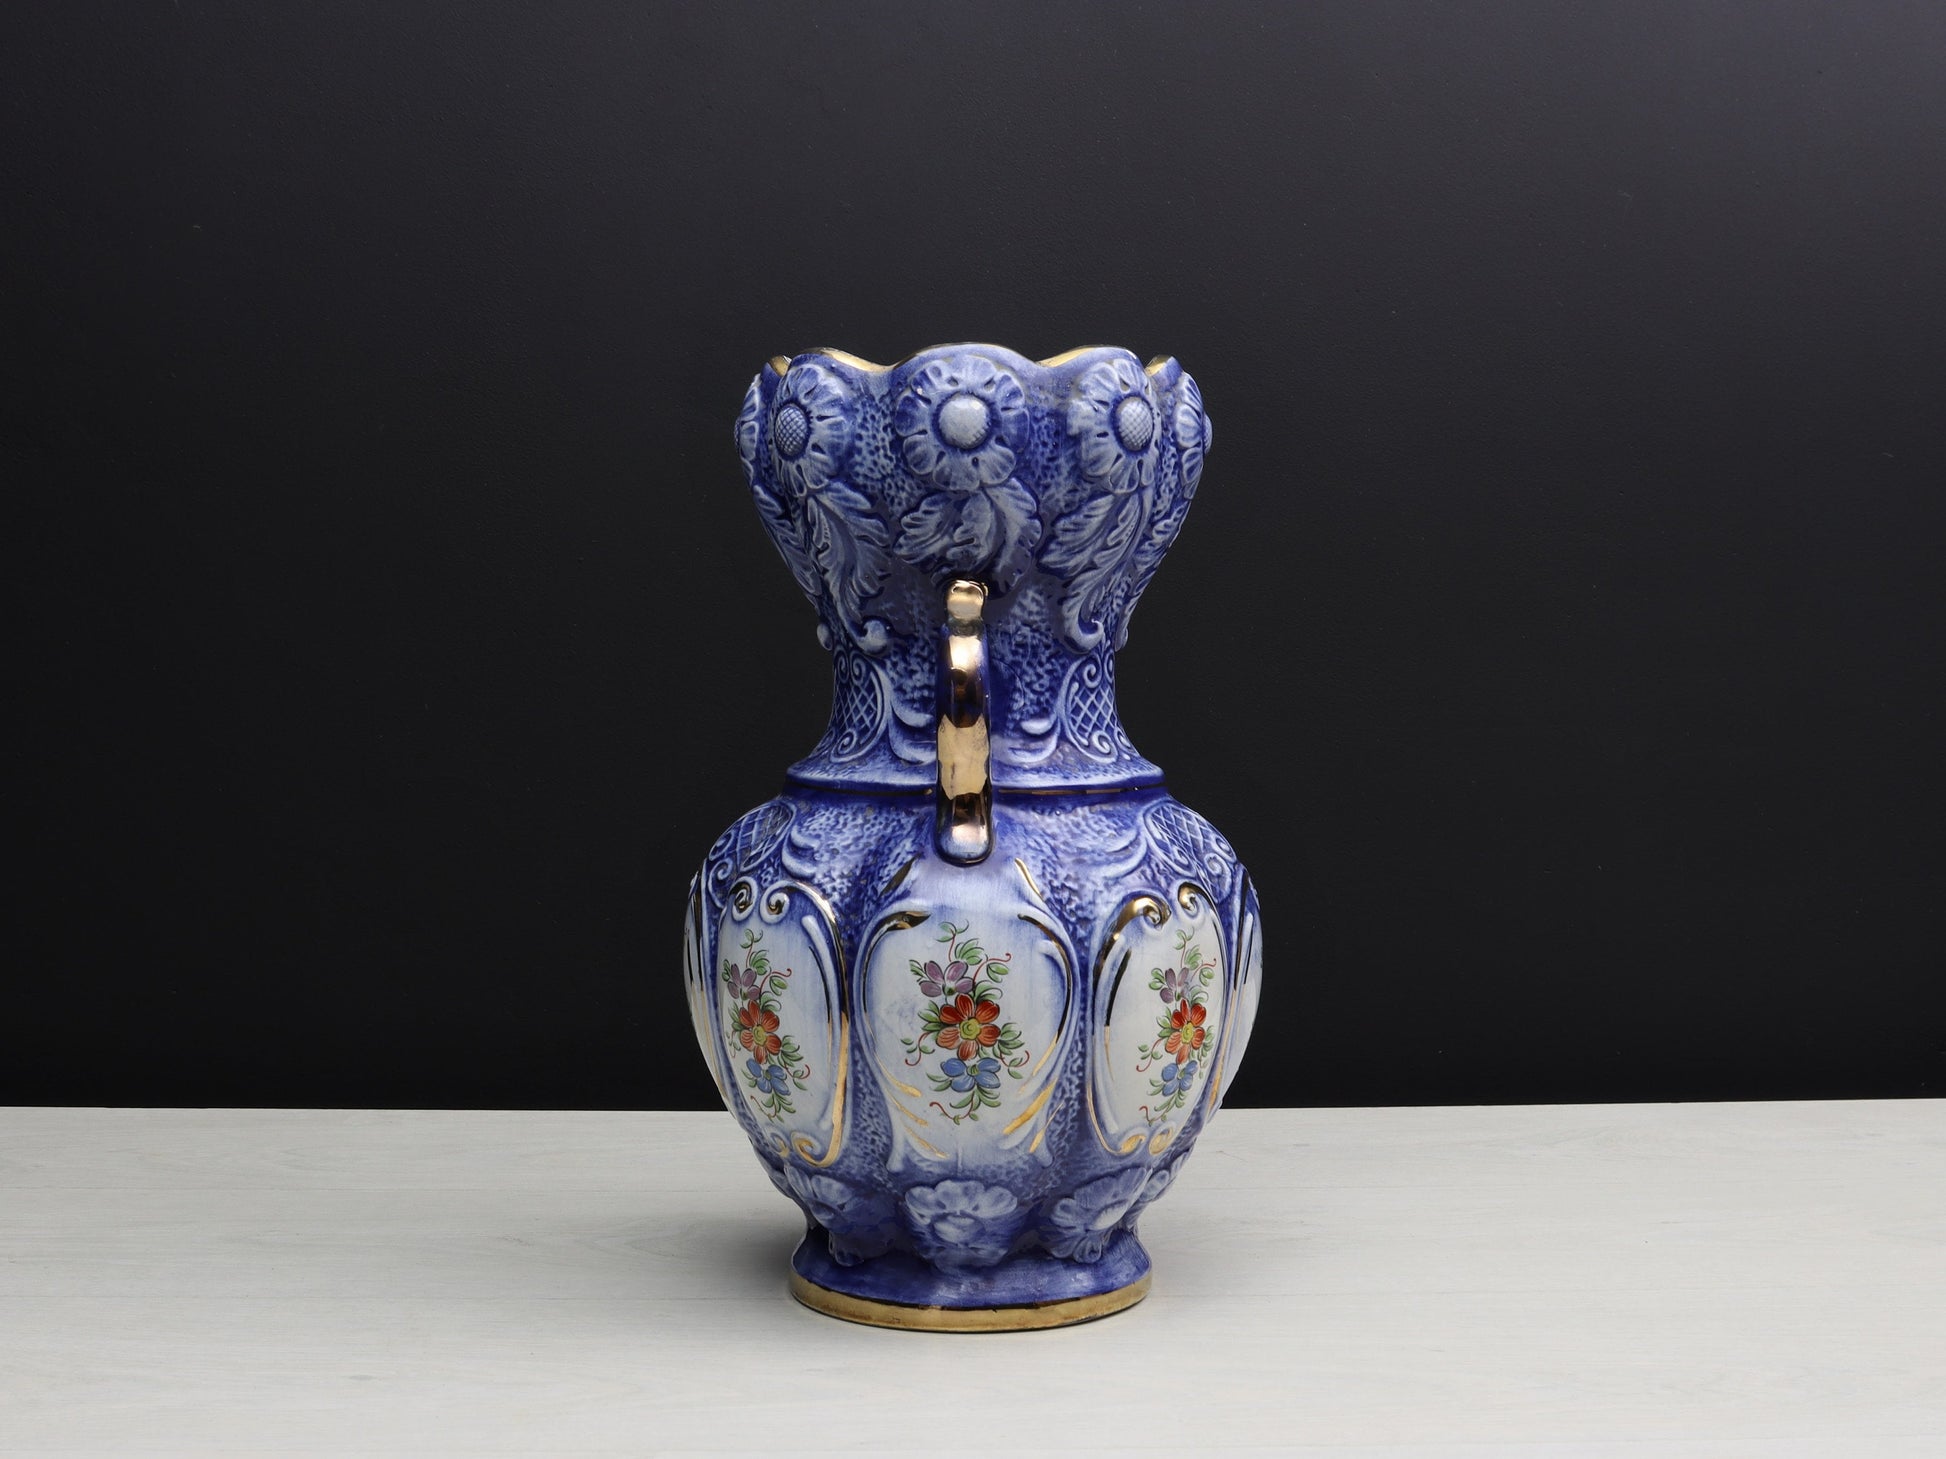 Elegant Centerpiece Vase | Decorative Vase-Vintage Home Decor